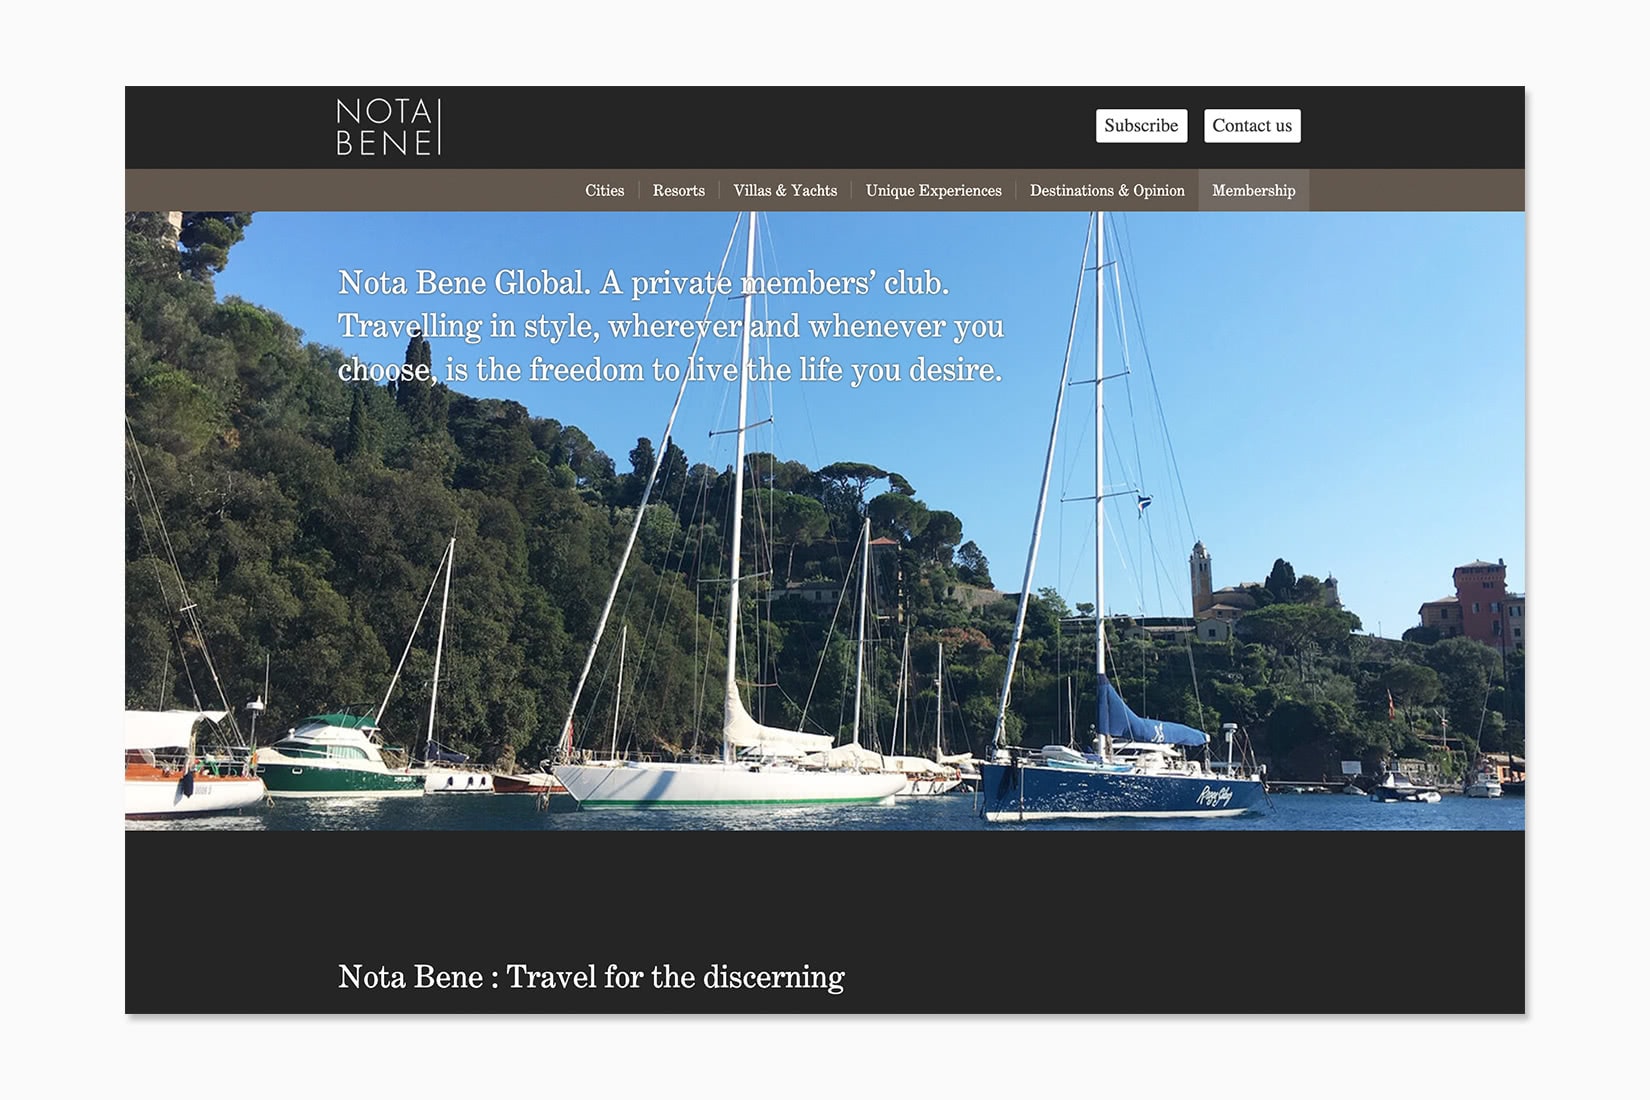 Le meilleur service de conciergerie de luxe : Nota Bene - Luxe Digital